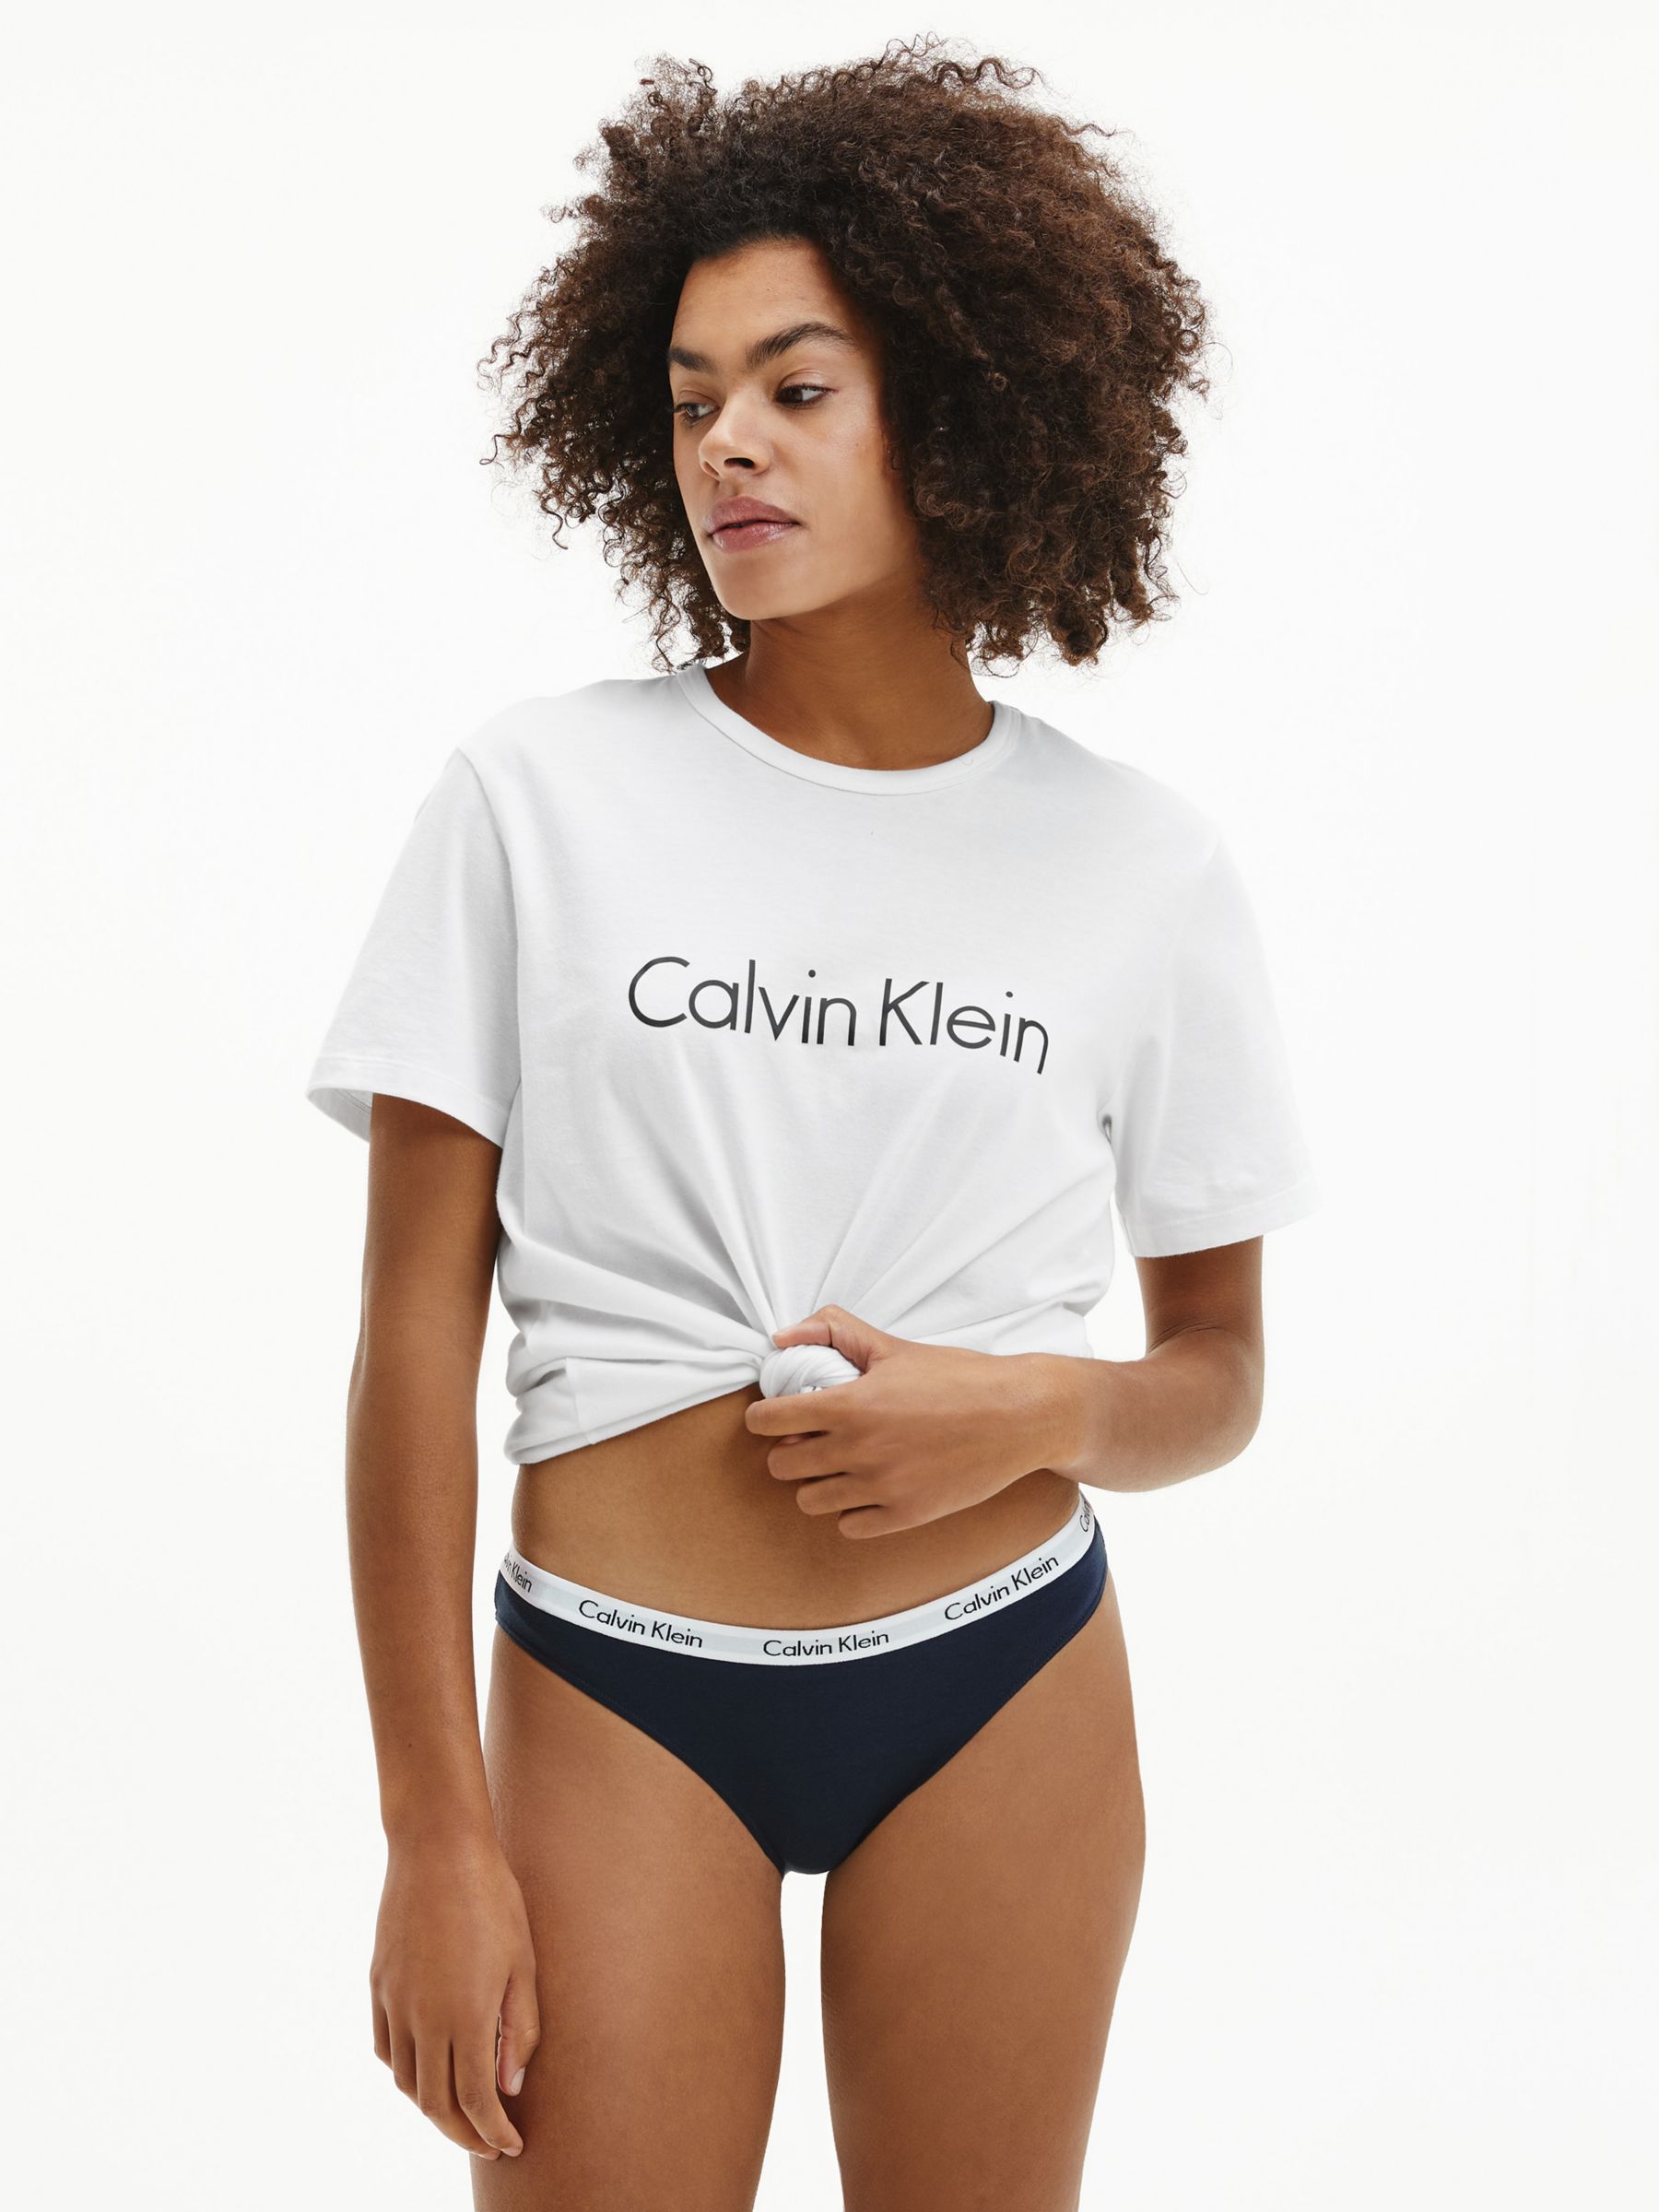 Calvin Klein Carousel Bikini Knickers, Shoreline at John Lewis & Partners